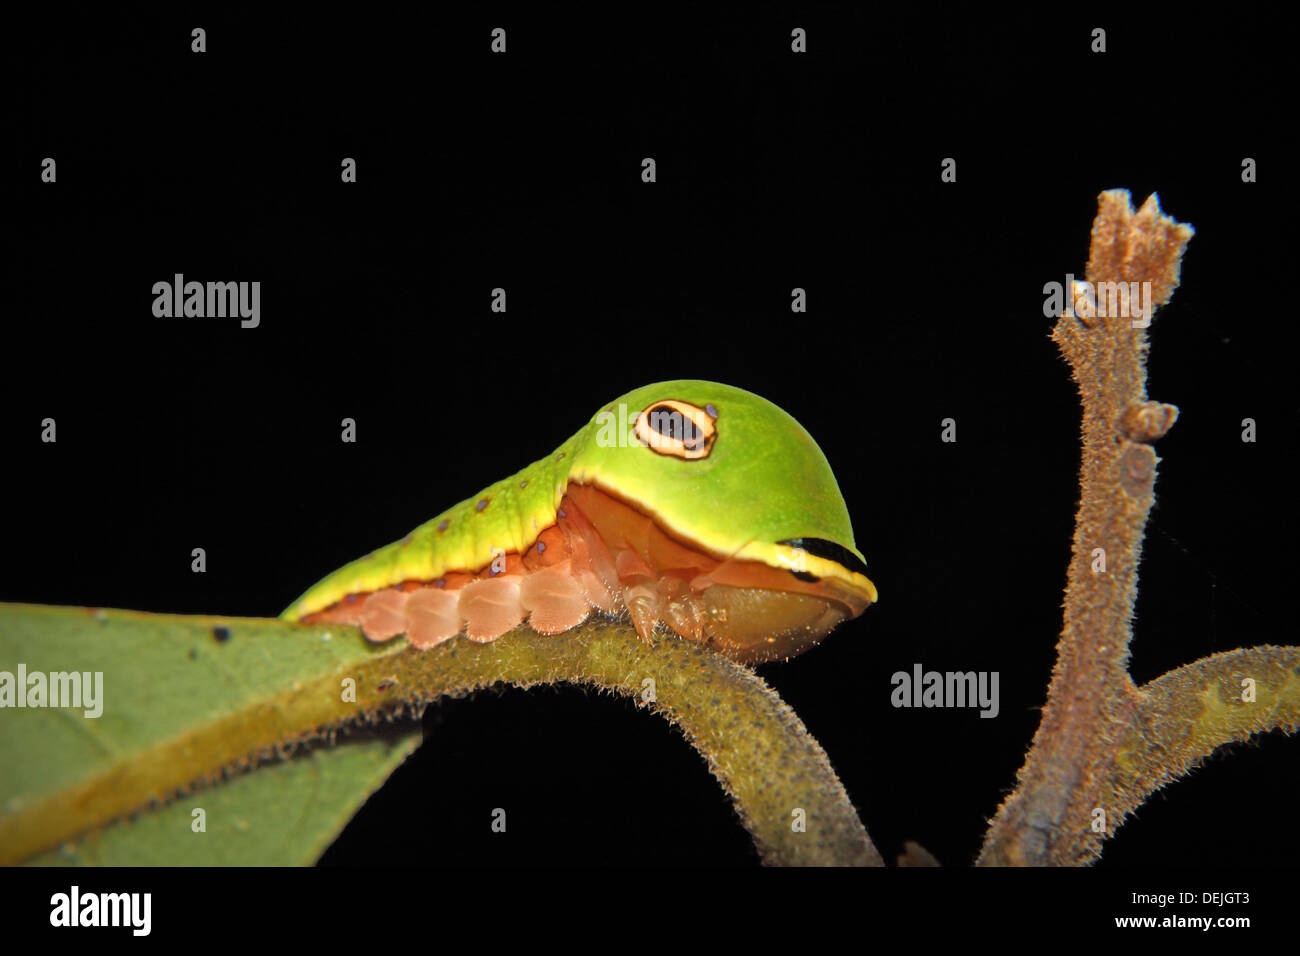 A Spicebush swallowtail caterpillar mimicking a green snake. Stock Photo